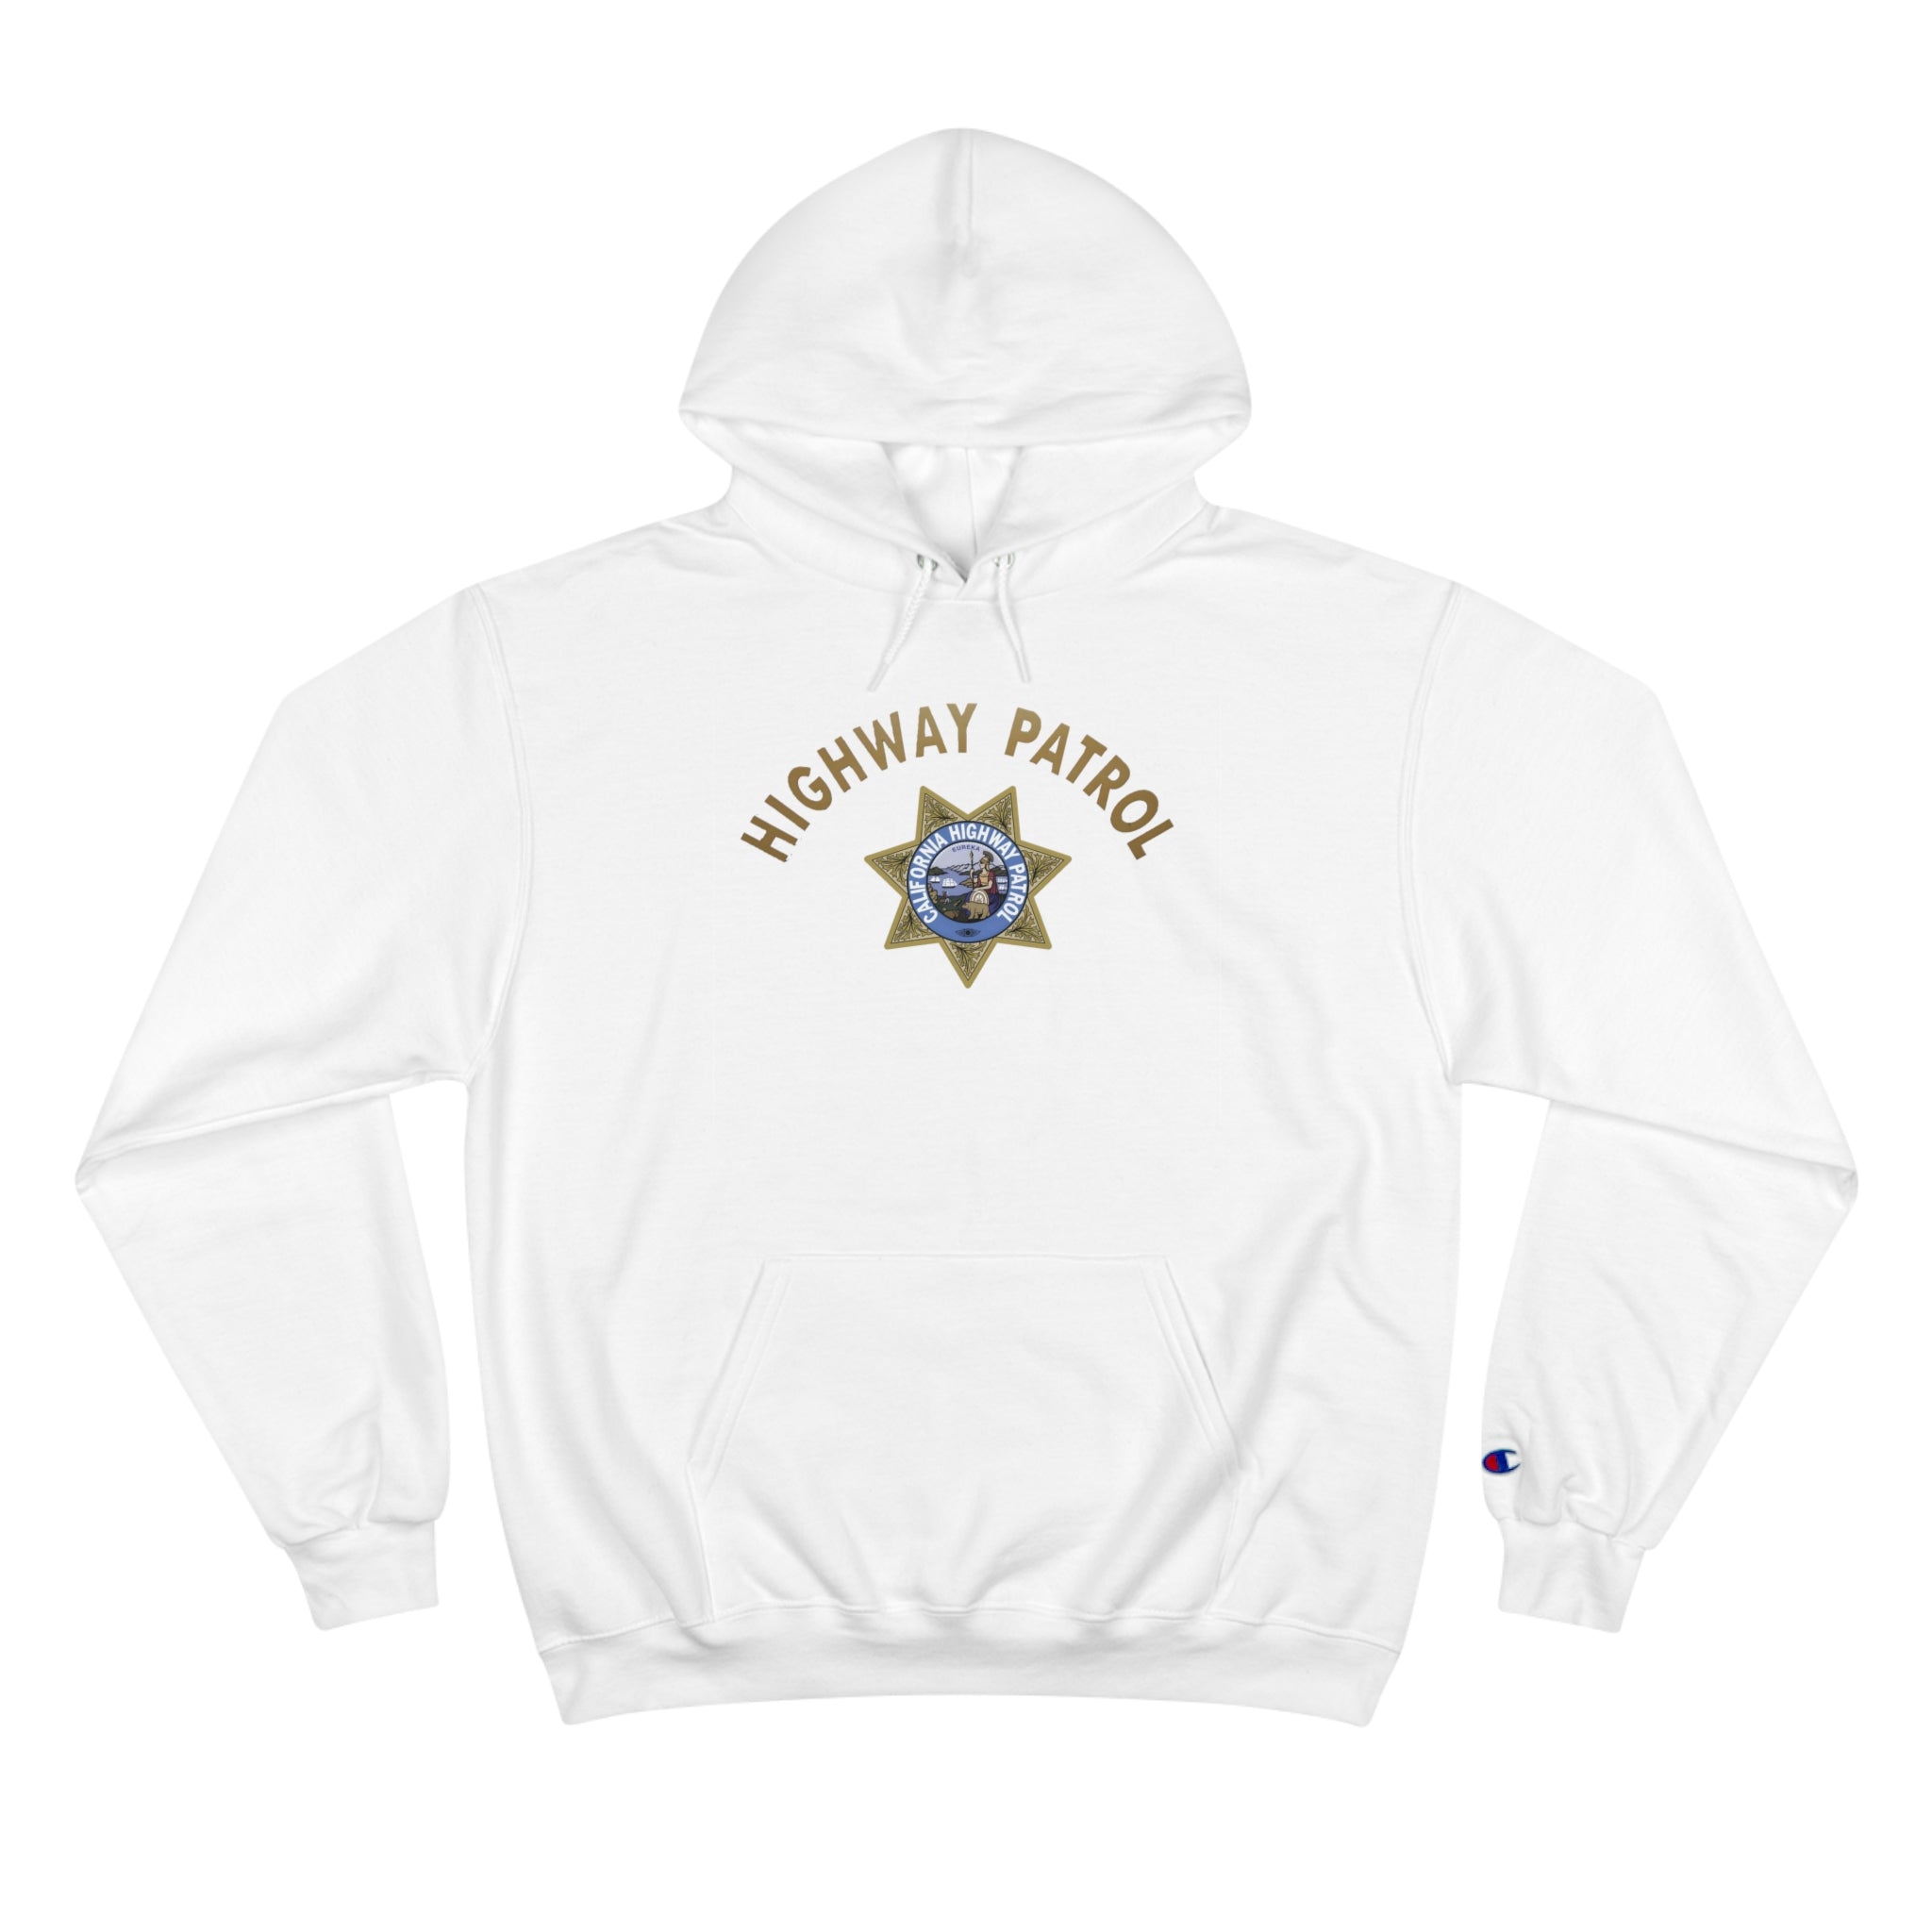 Champion Eco Hooded Sweatshirt - Highway Patrol & Retired Emblem